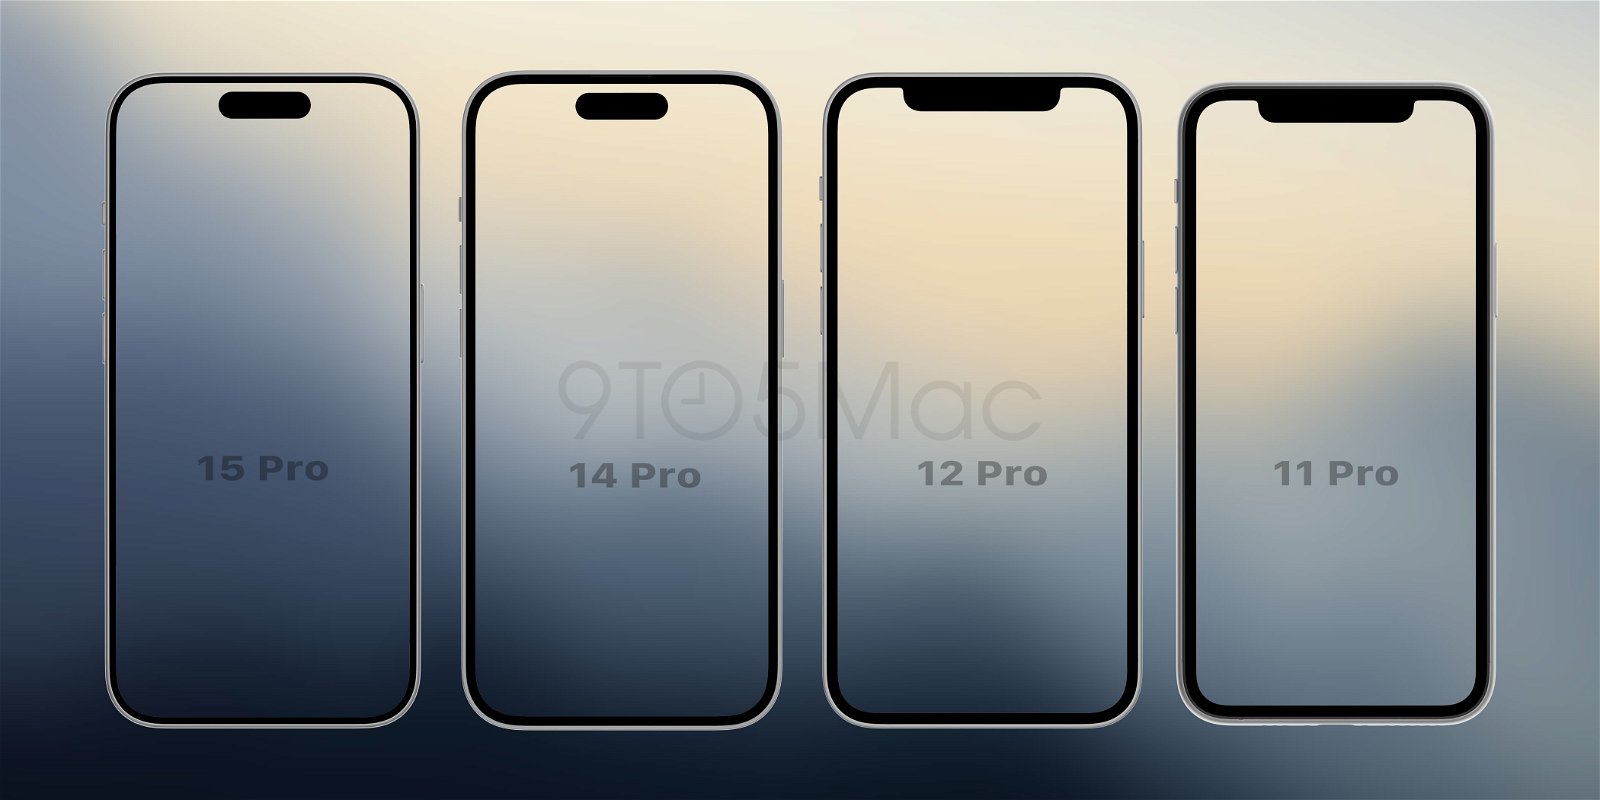 Marcos de los iPhone 15 Pro, iPhone 14 Pro, iPhone 12 Pro y iPhone 11 Pro